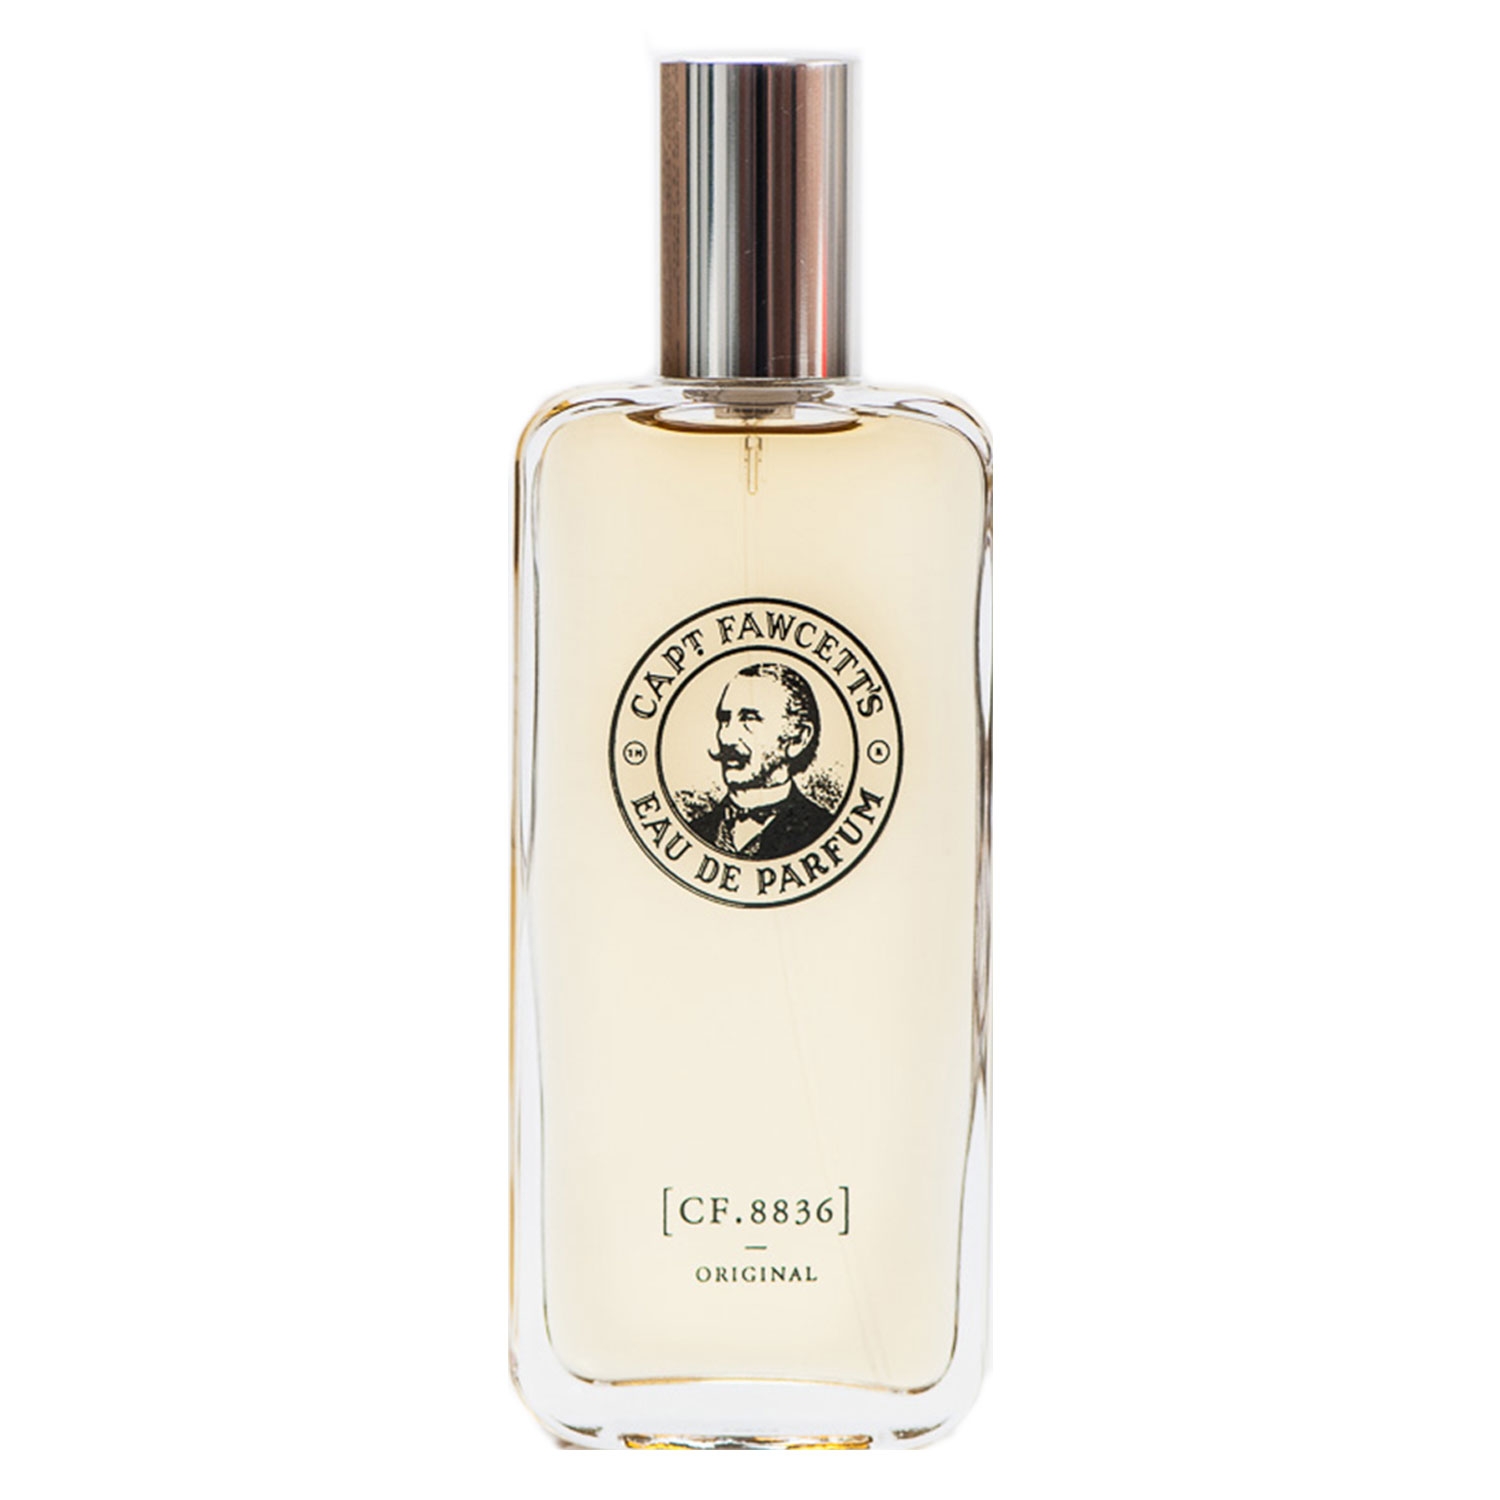 Product image from Capt. Fawcett Care - Eau De Parfum (CF.8836) Original